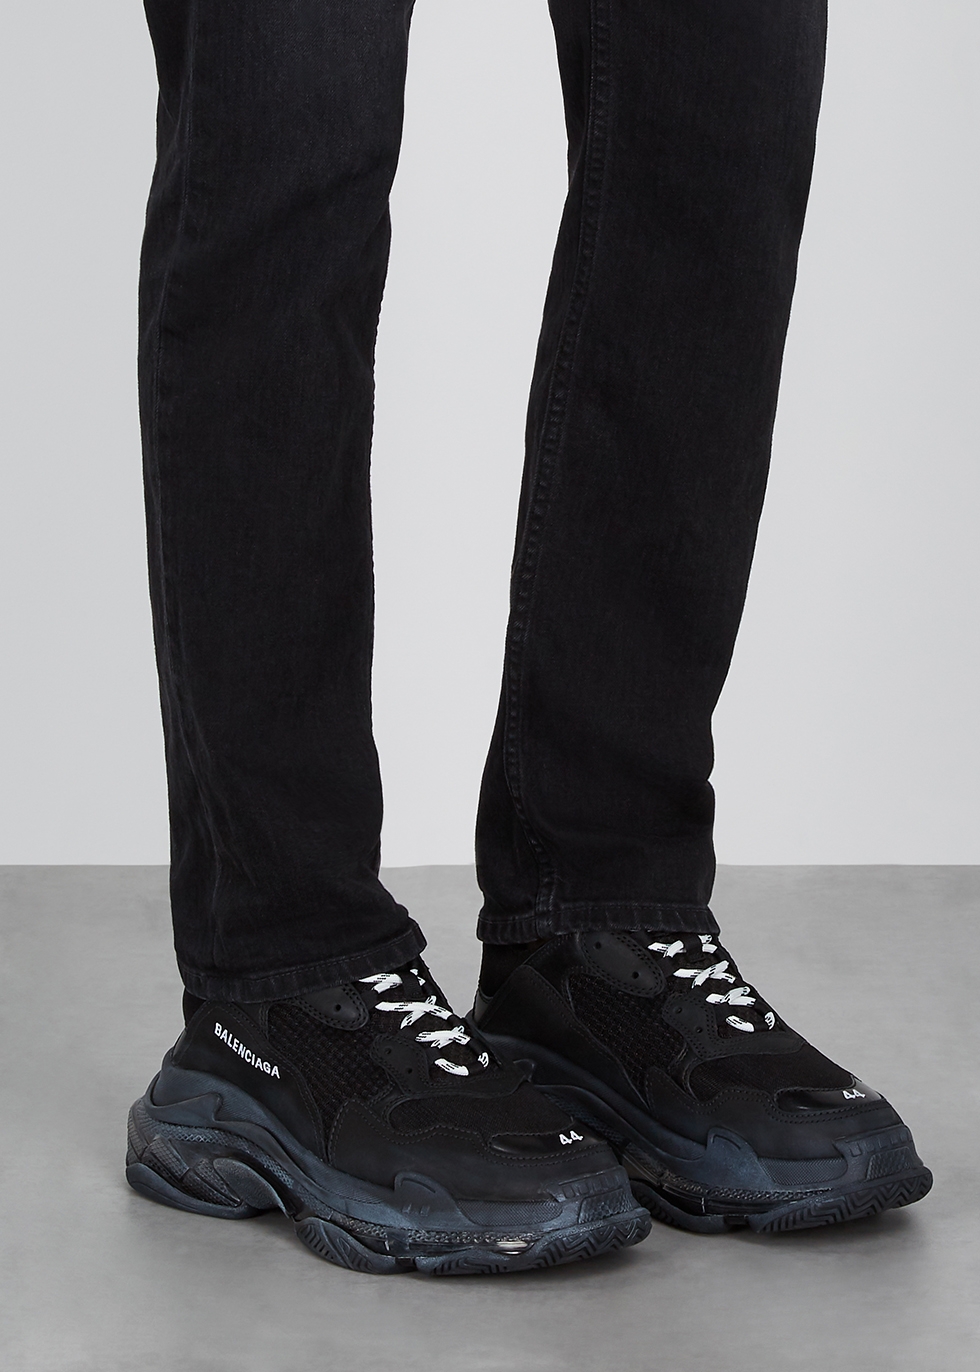 Balenciaga Triple S Sneaker Size 44 in Red black Grailed